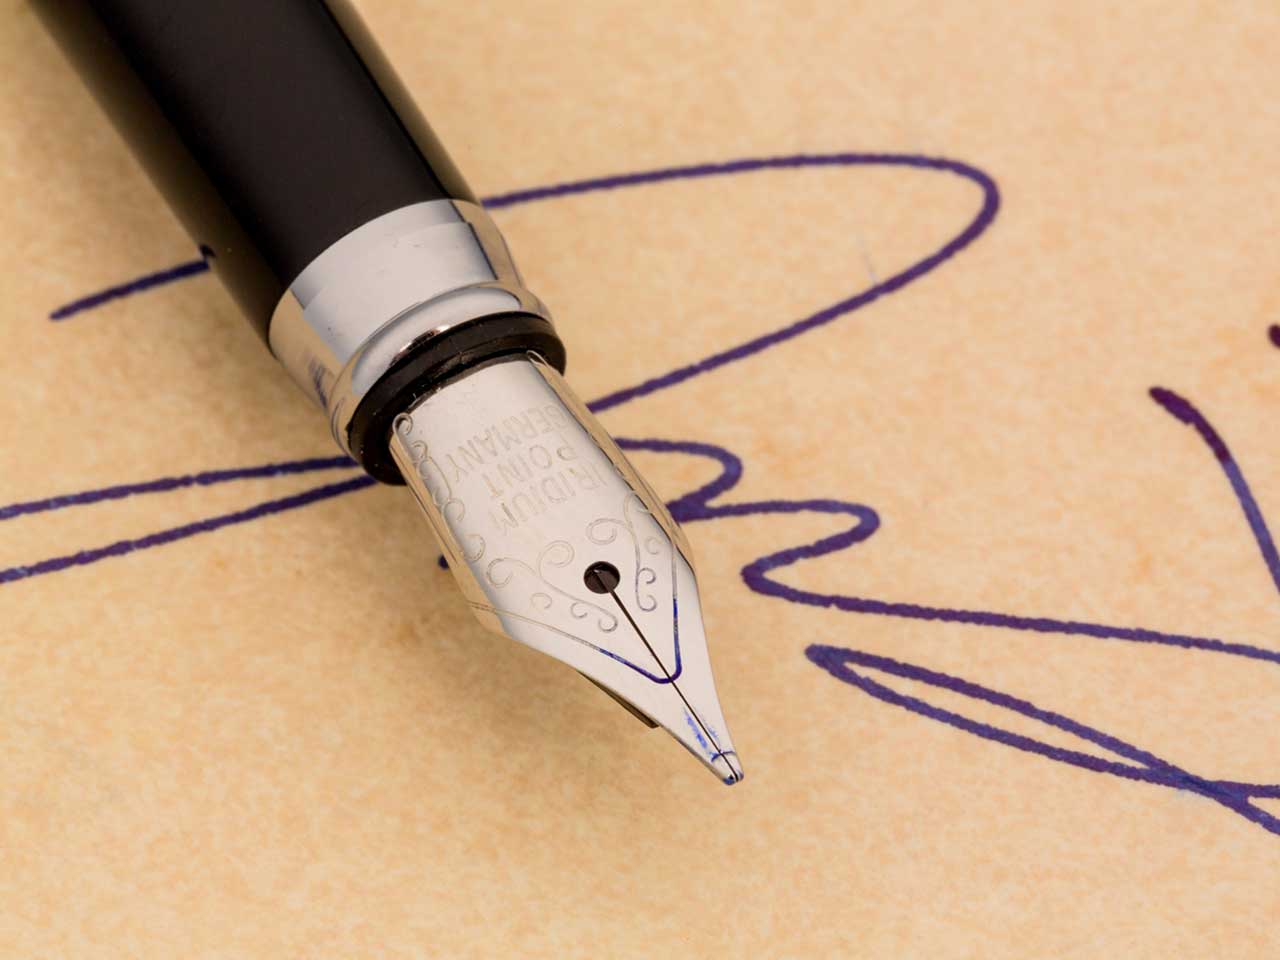 Signature and pen